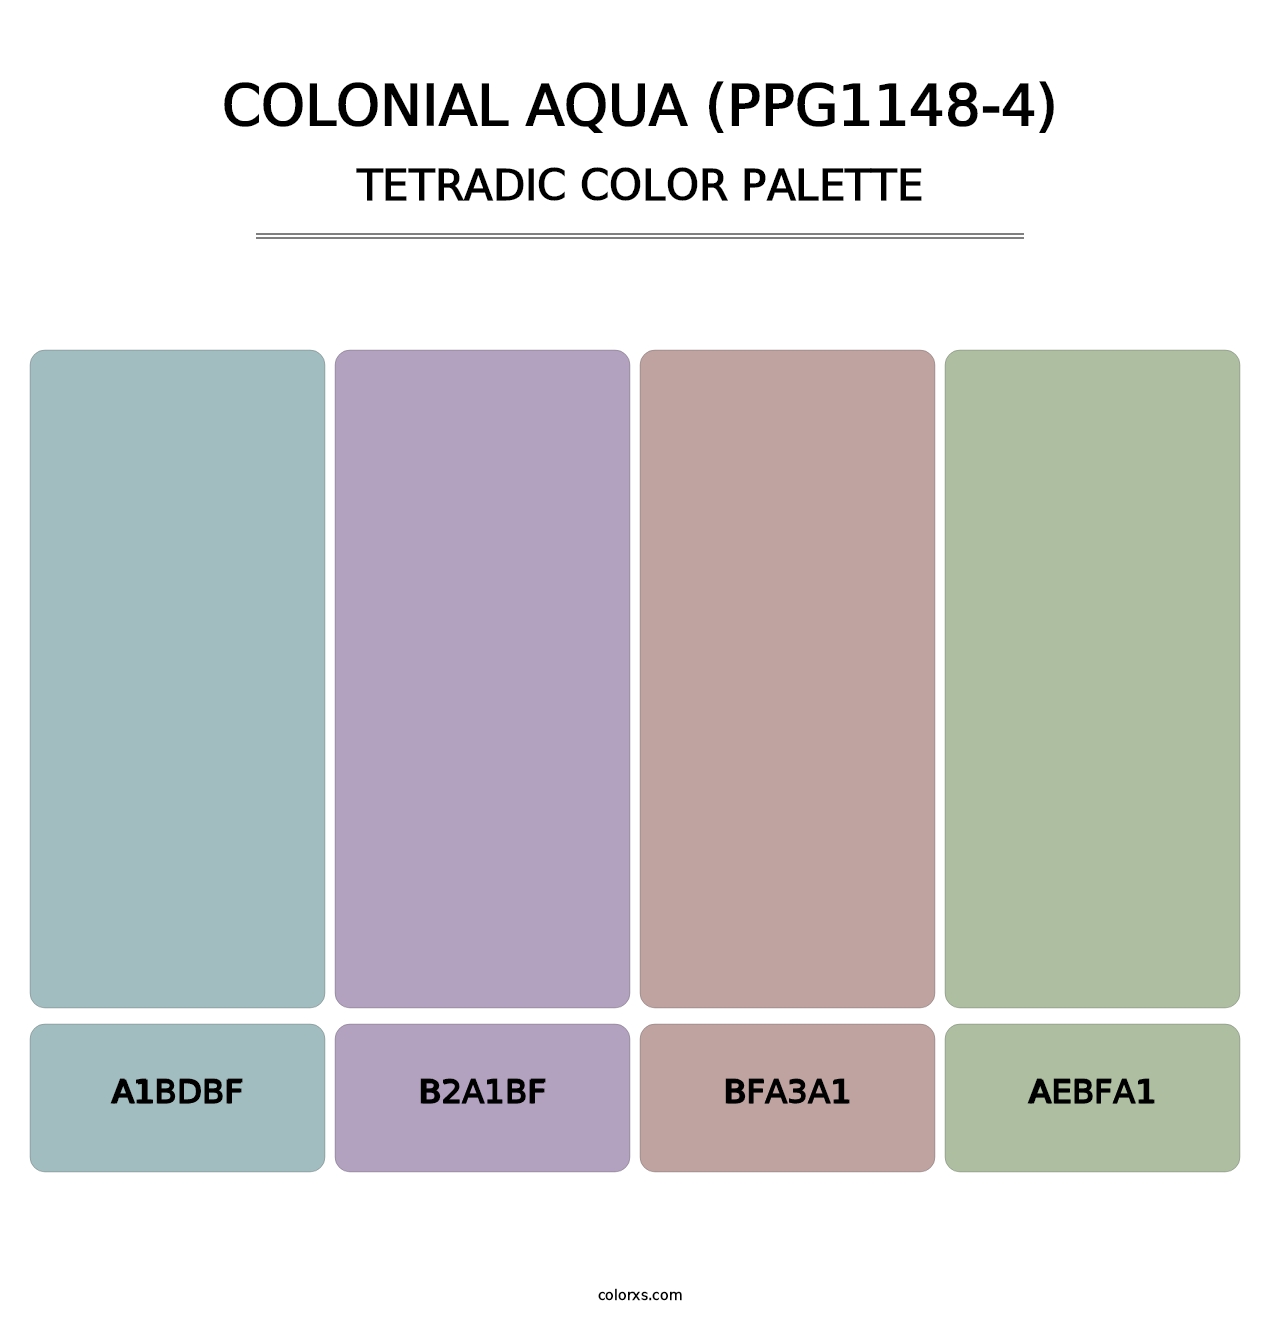 Colonial Aqua (PPG1148-4) - Tetradic Color Palette